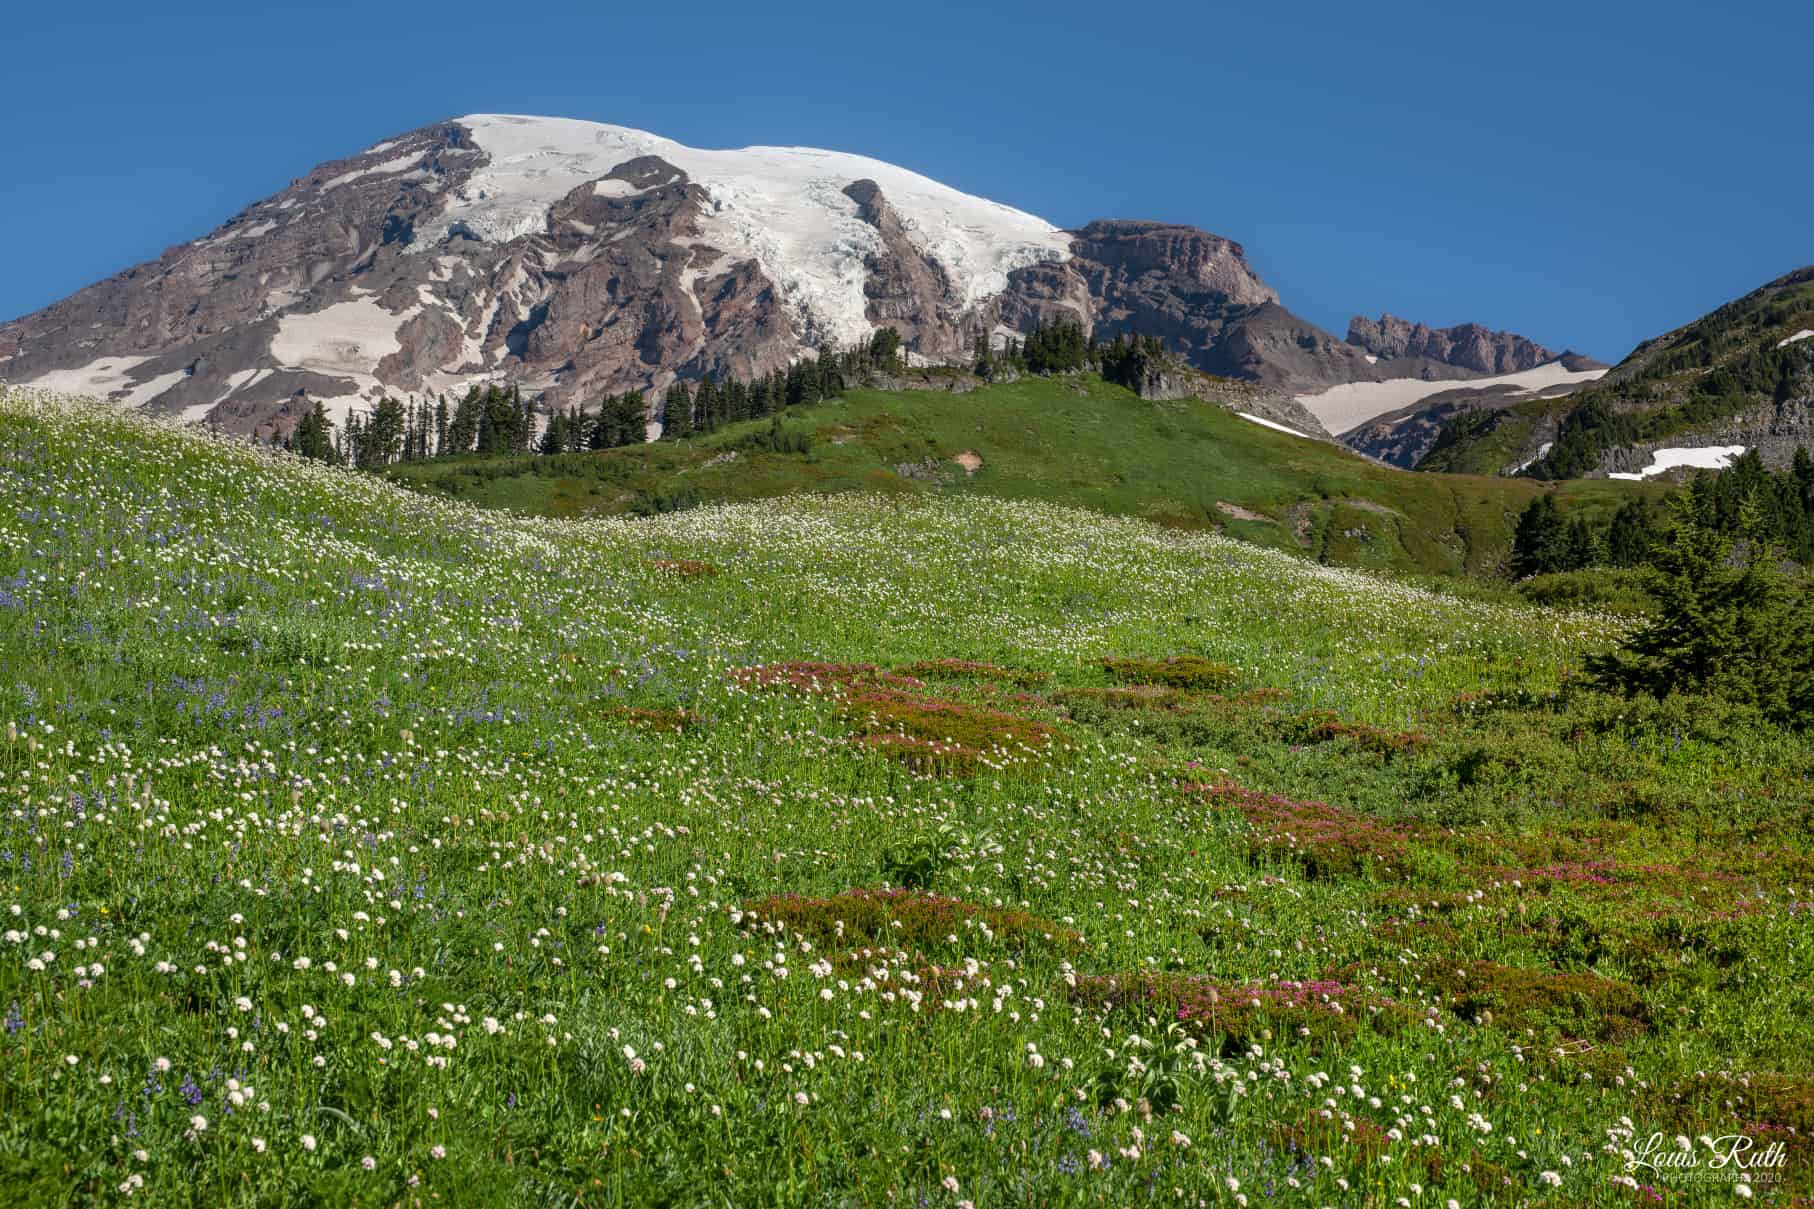 Mt. Rainier’s Wildflowers Making Their Colorful Debut